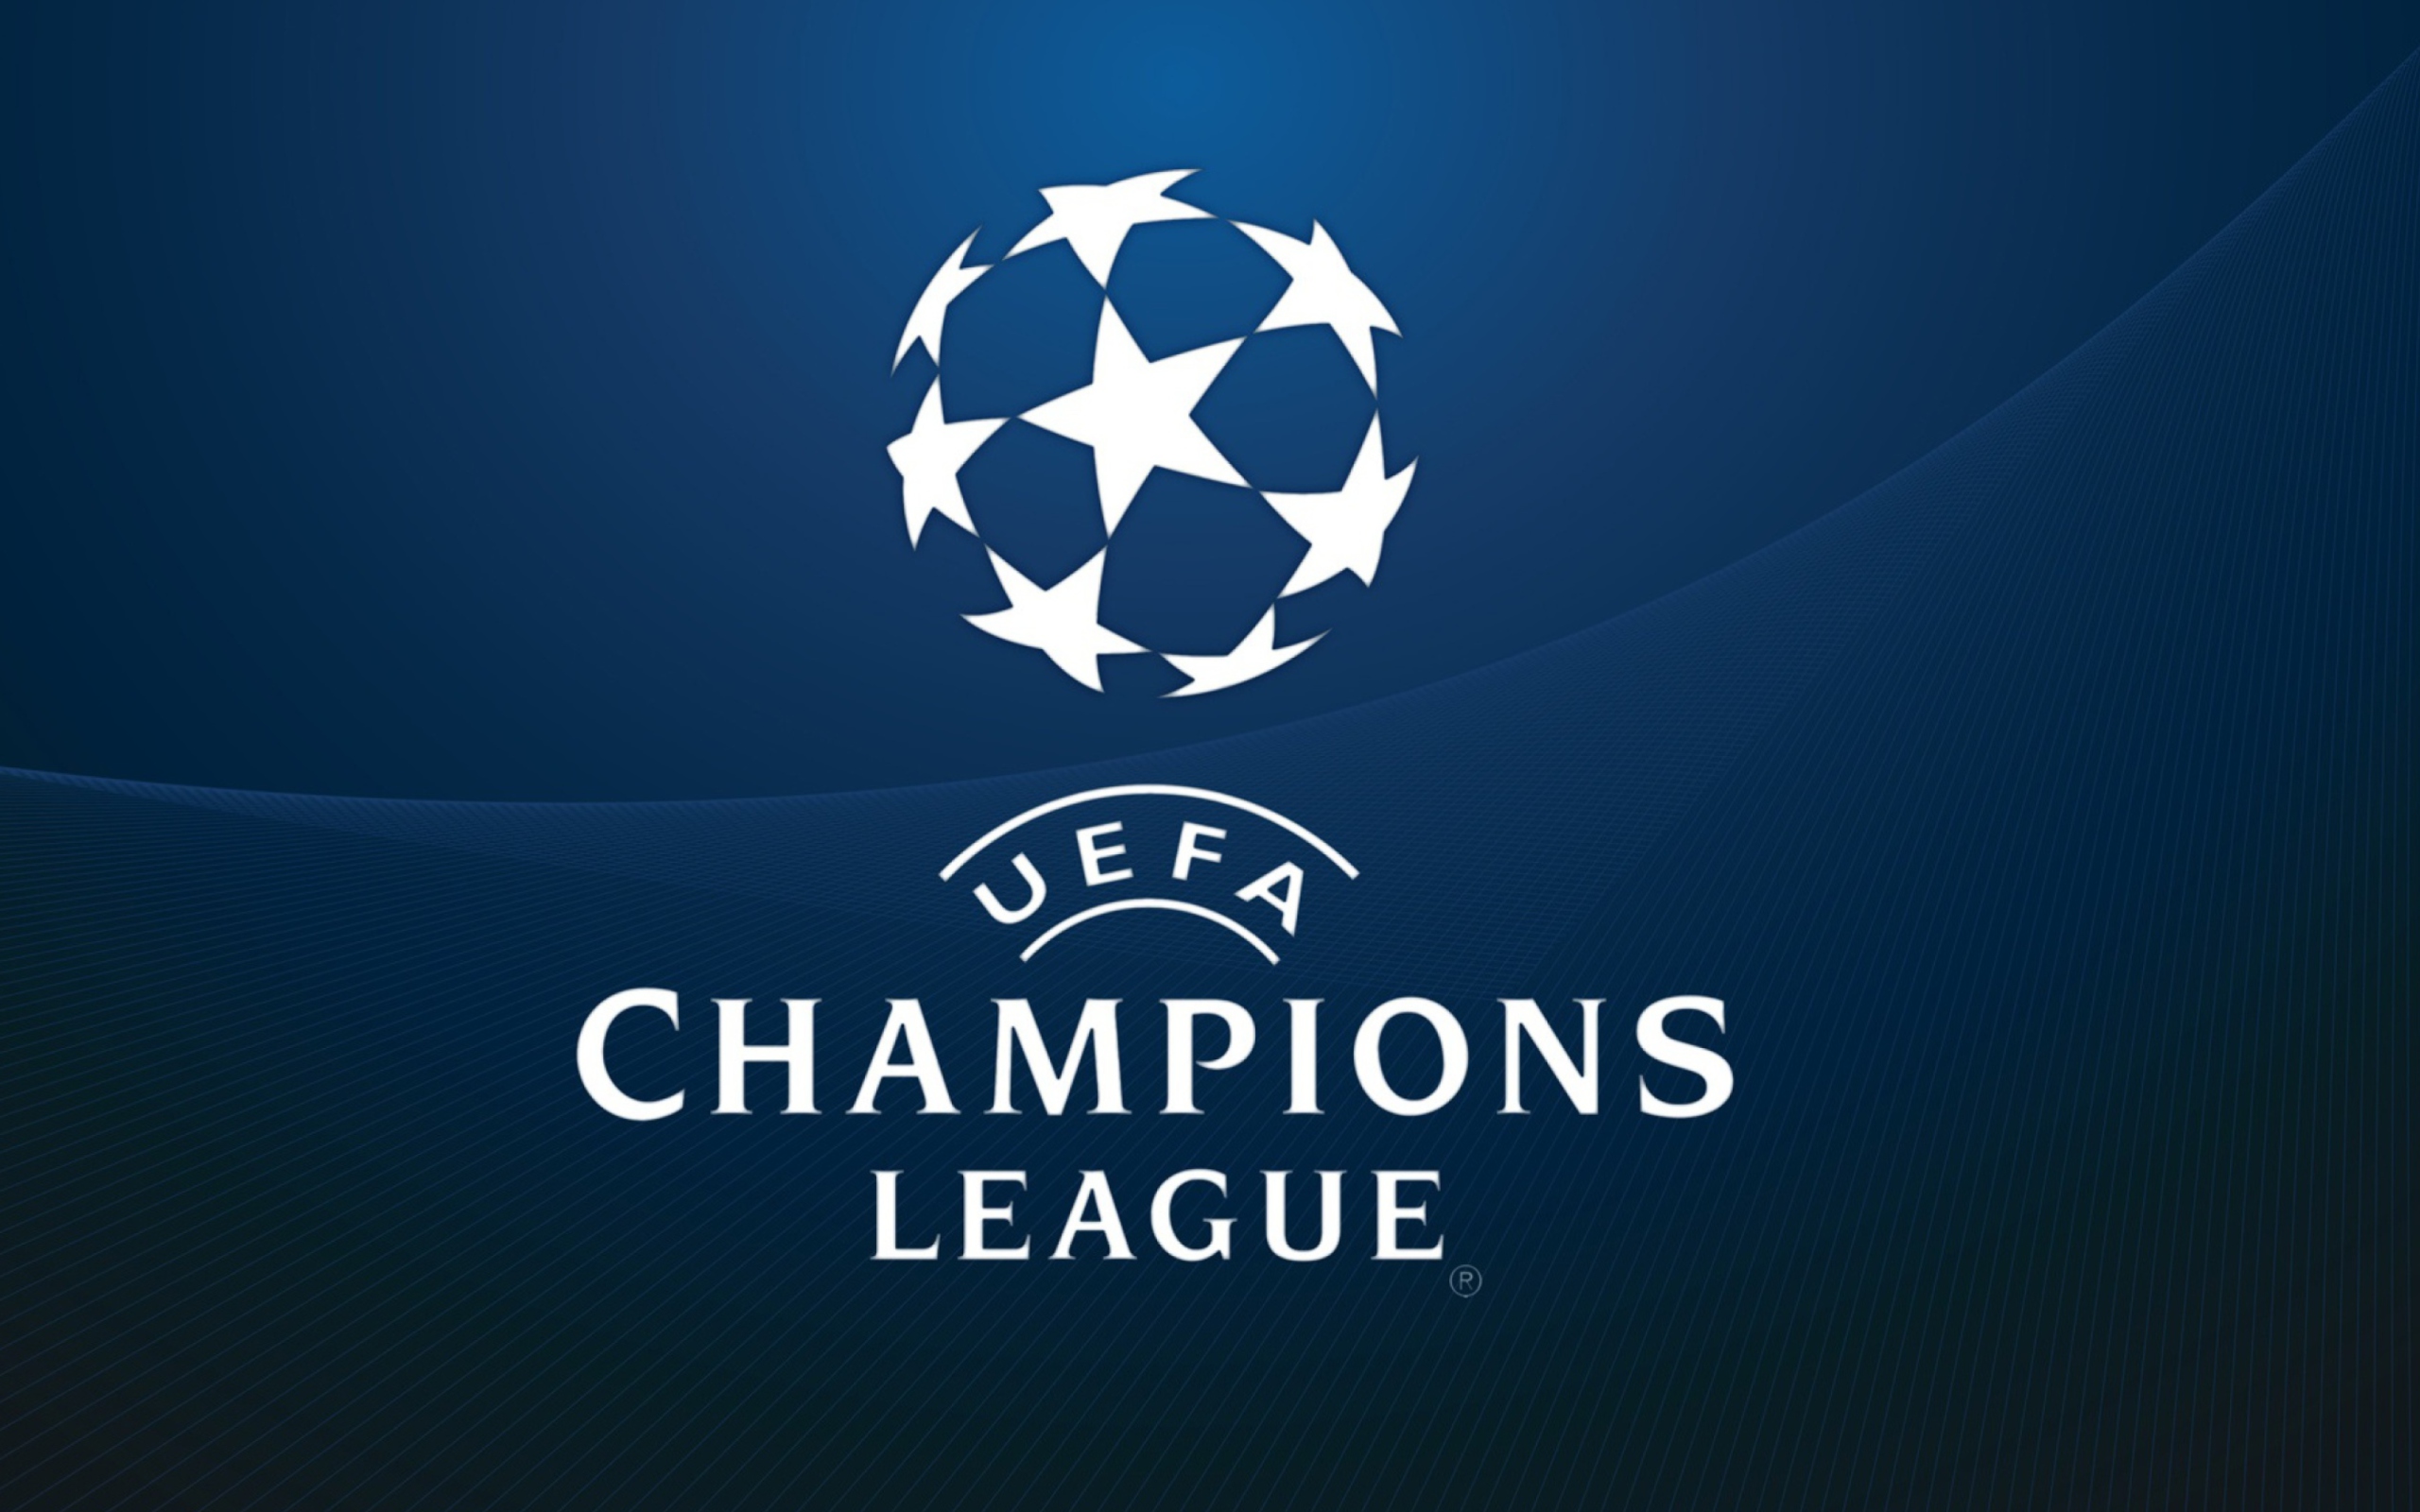 Uefa Champions League wallpaper 2560x1600